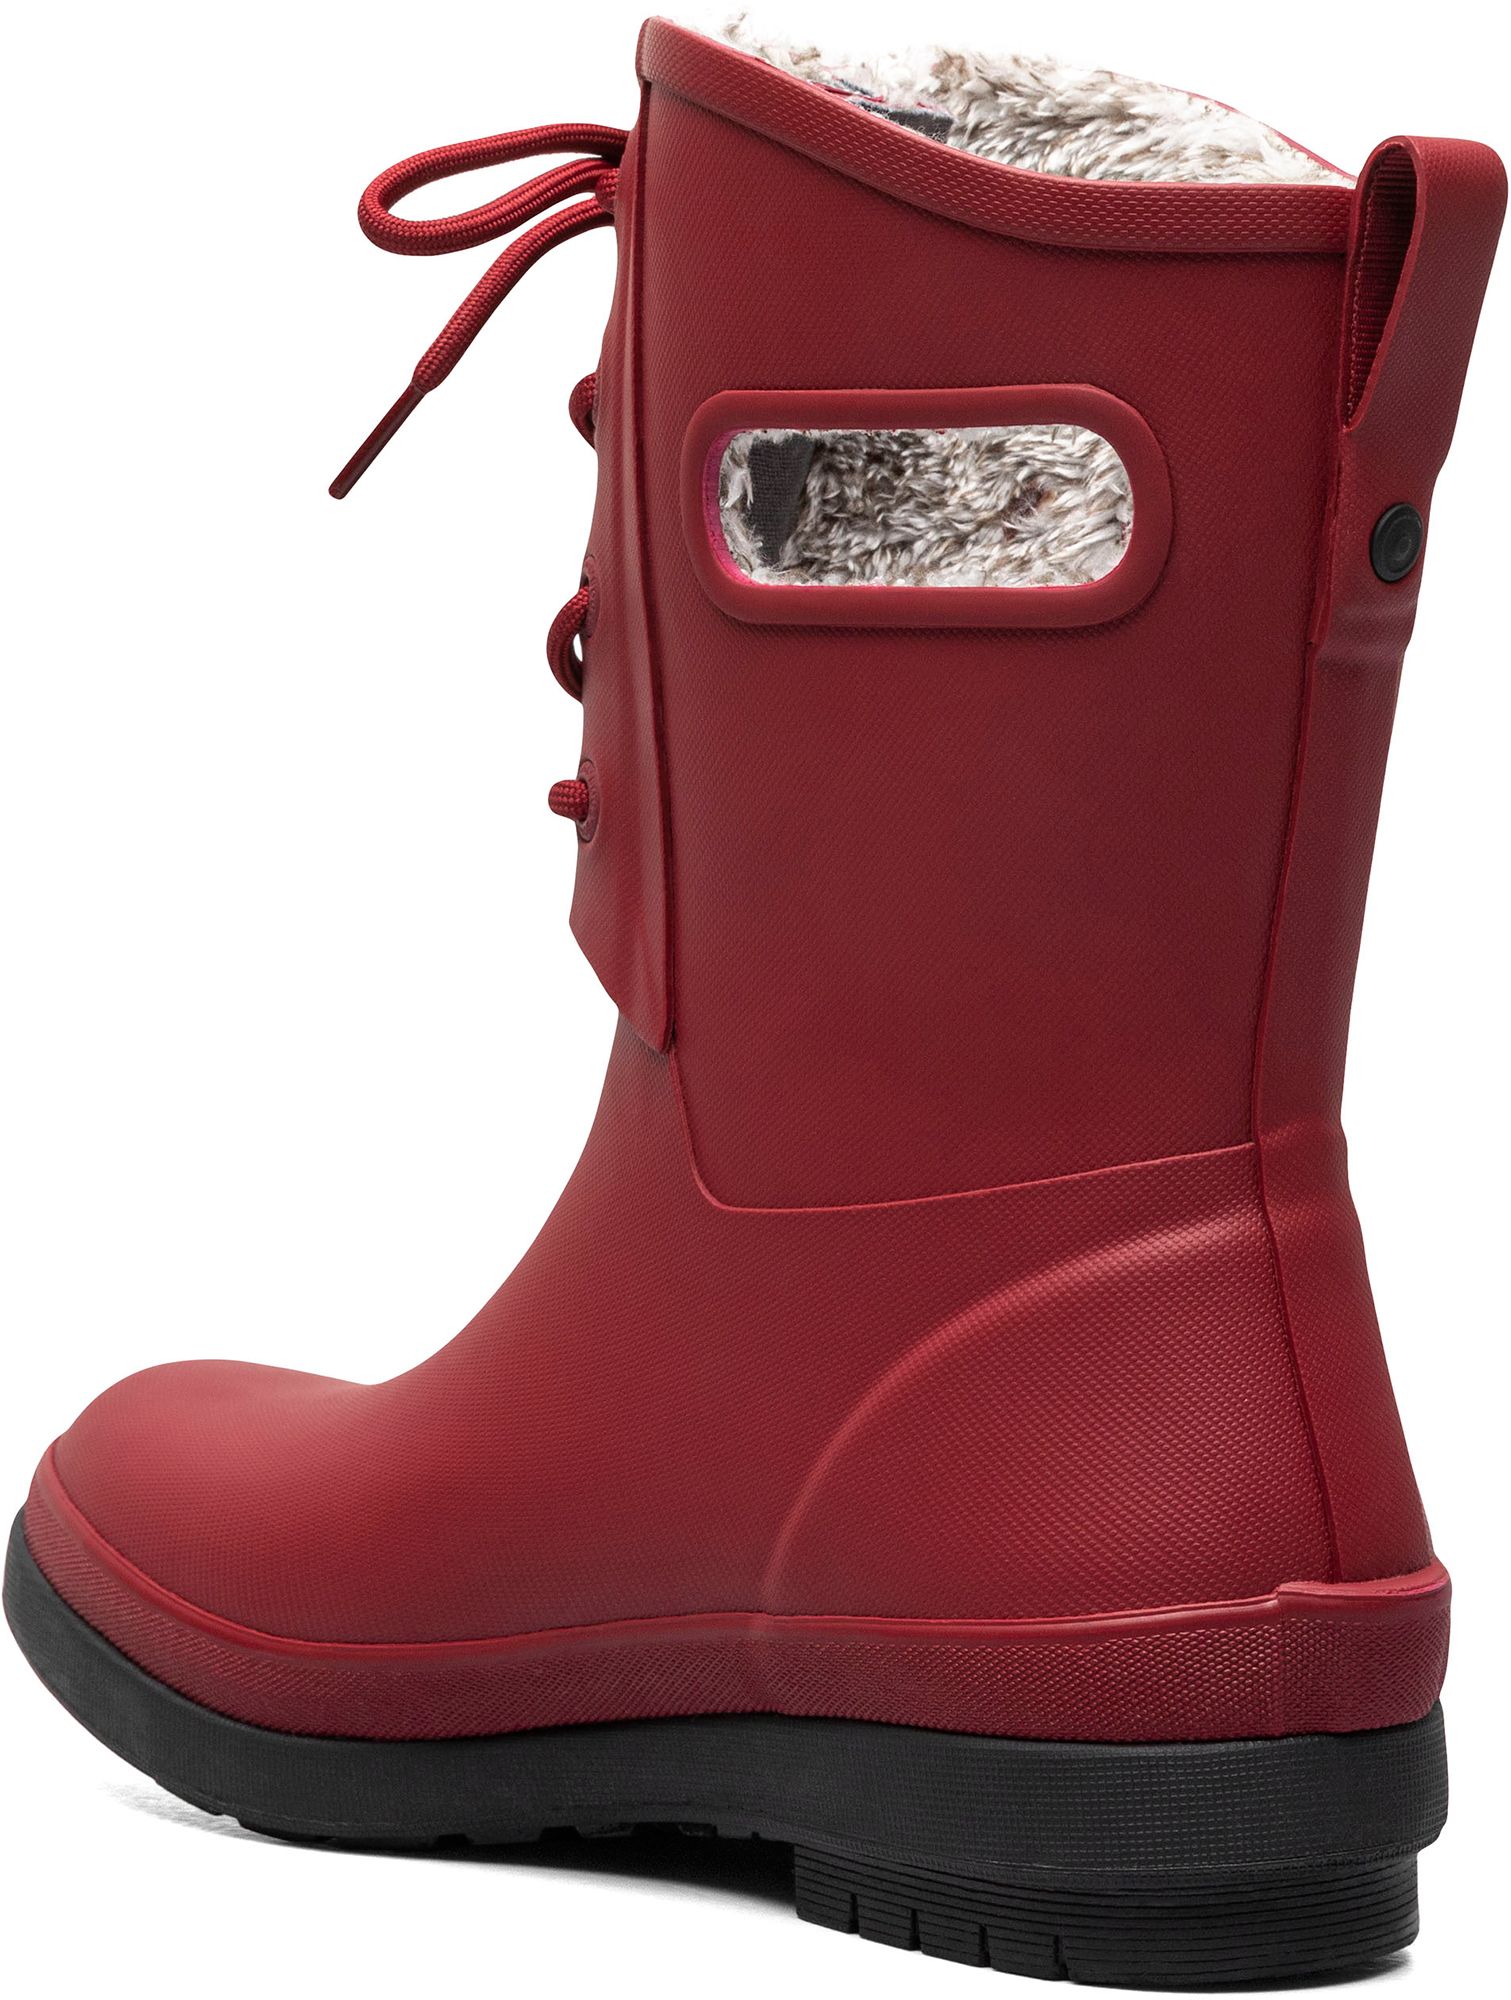 Bogs Women's Amanda Plush II Waterproof Lace-up Rain Boots